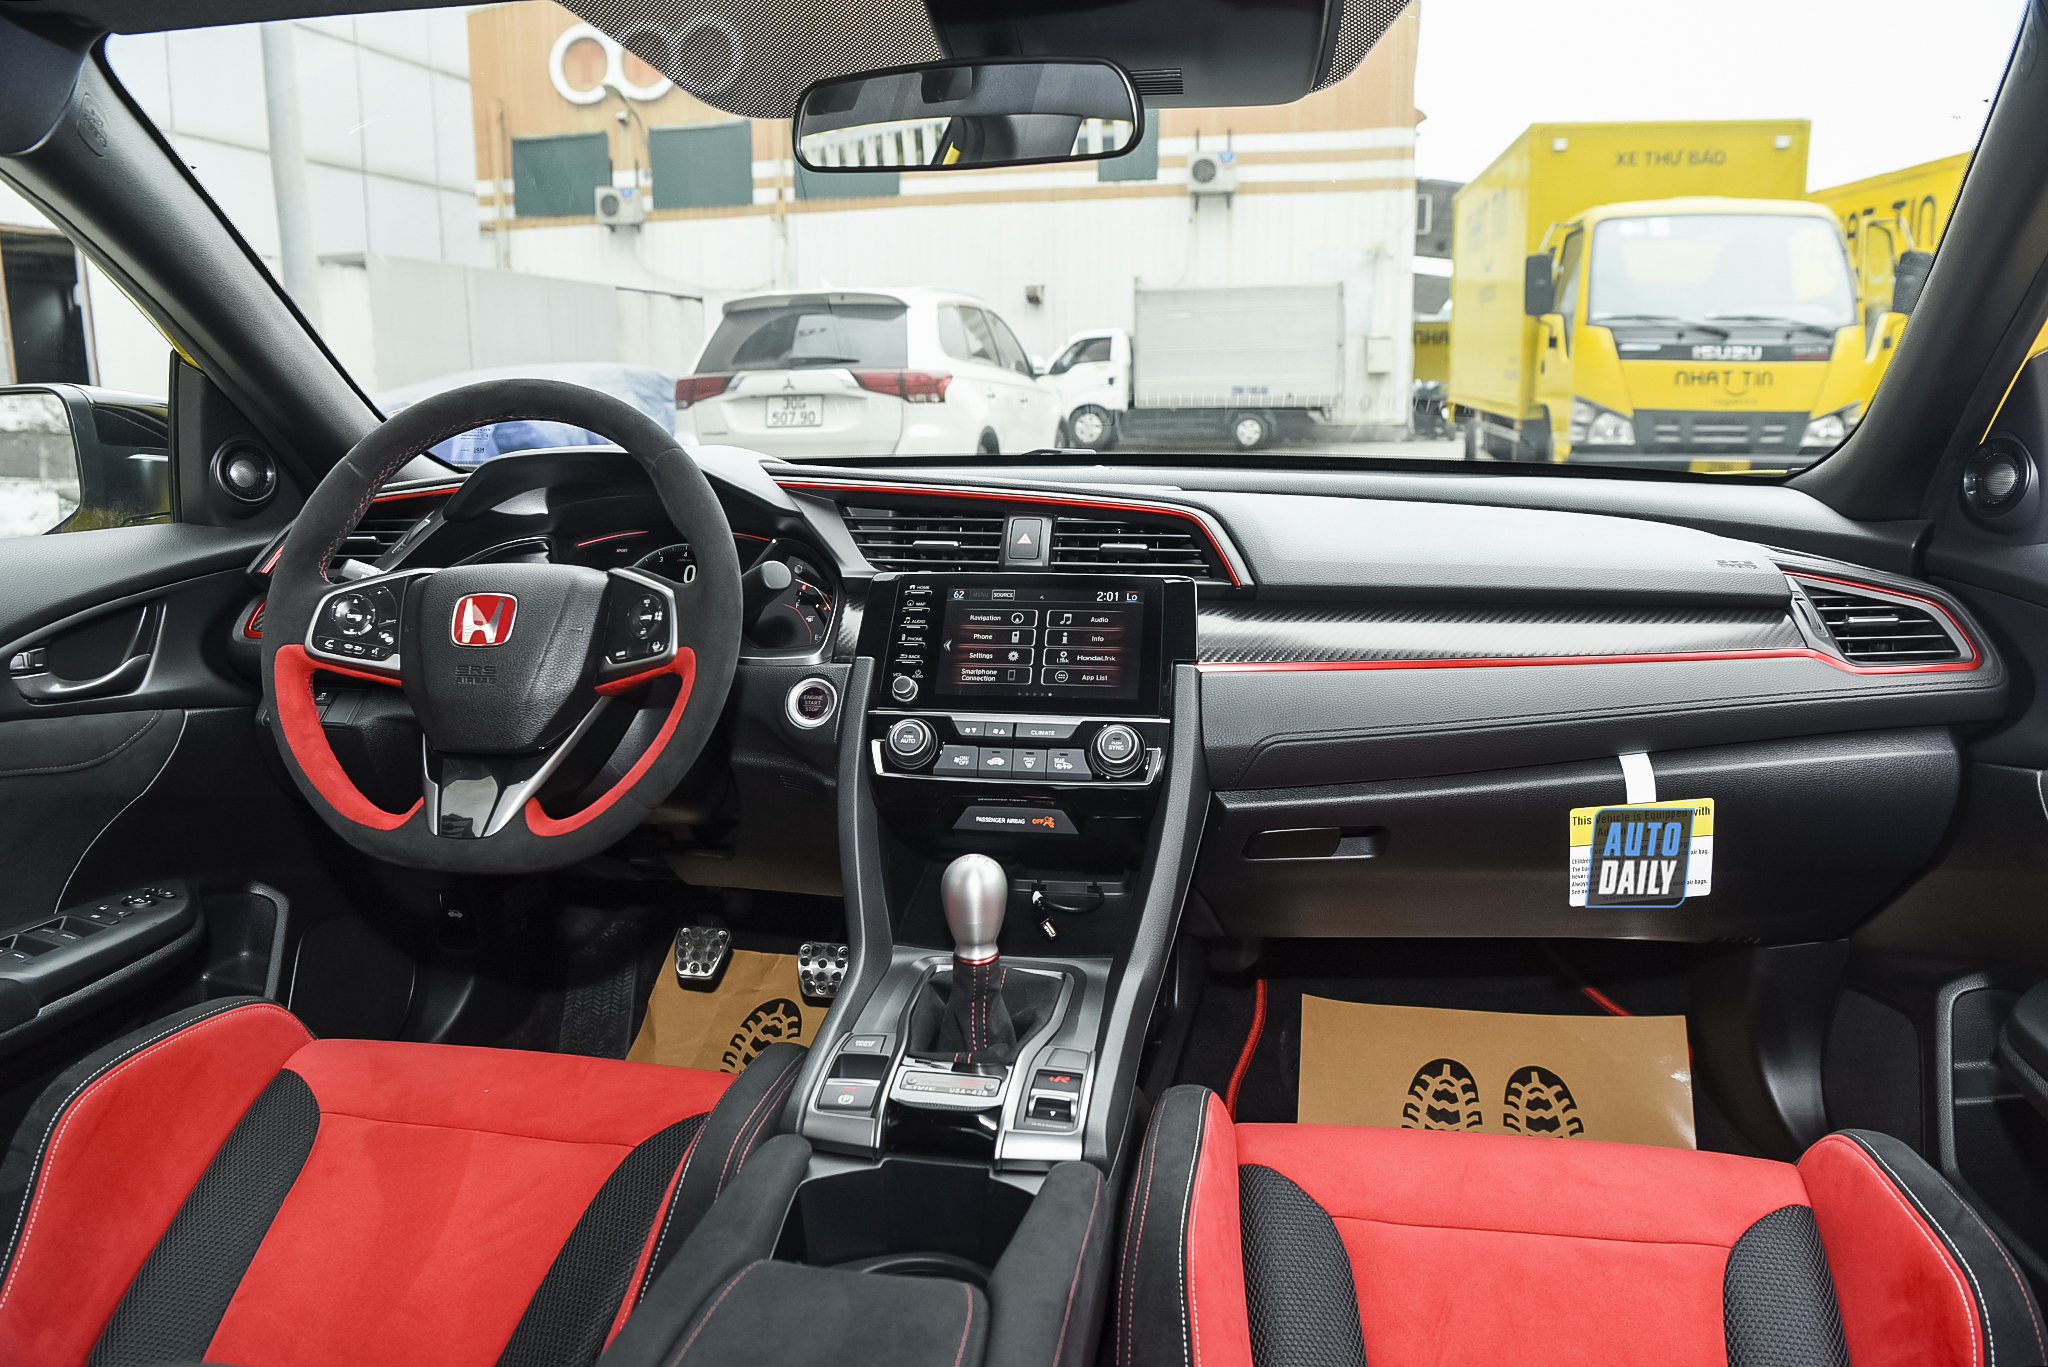 Gallery: 2017 Honda Civic Type R interior